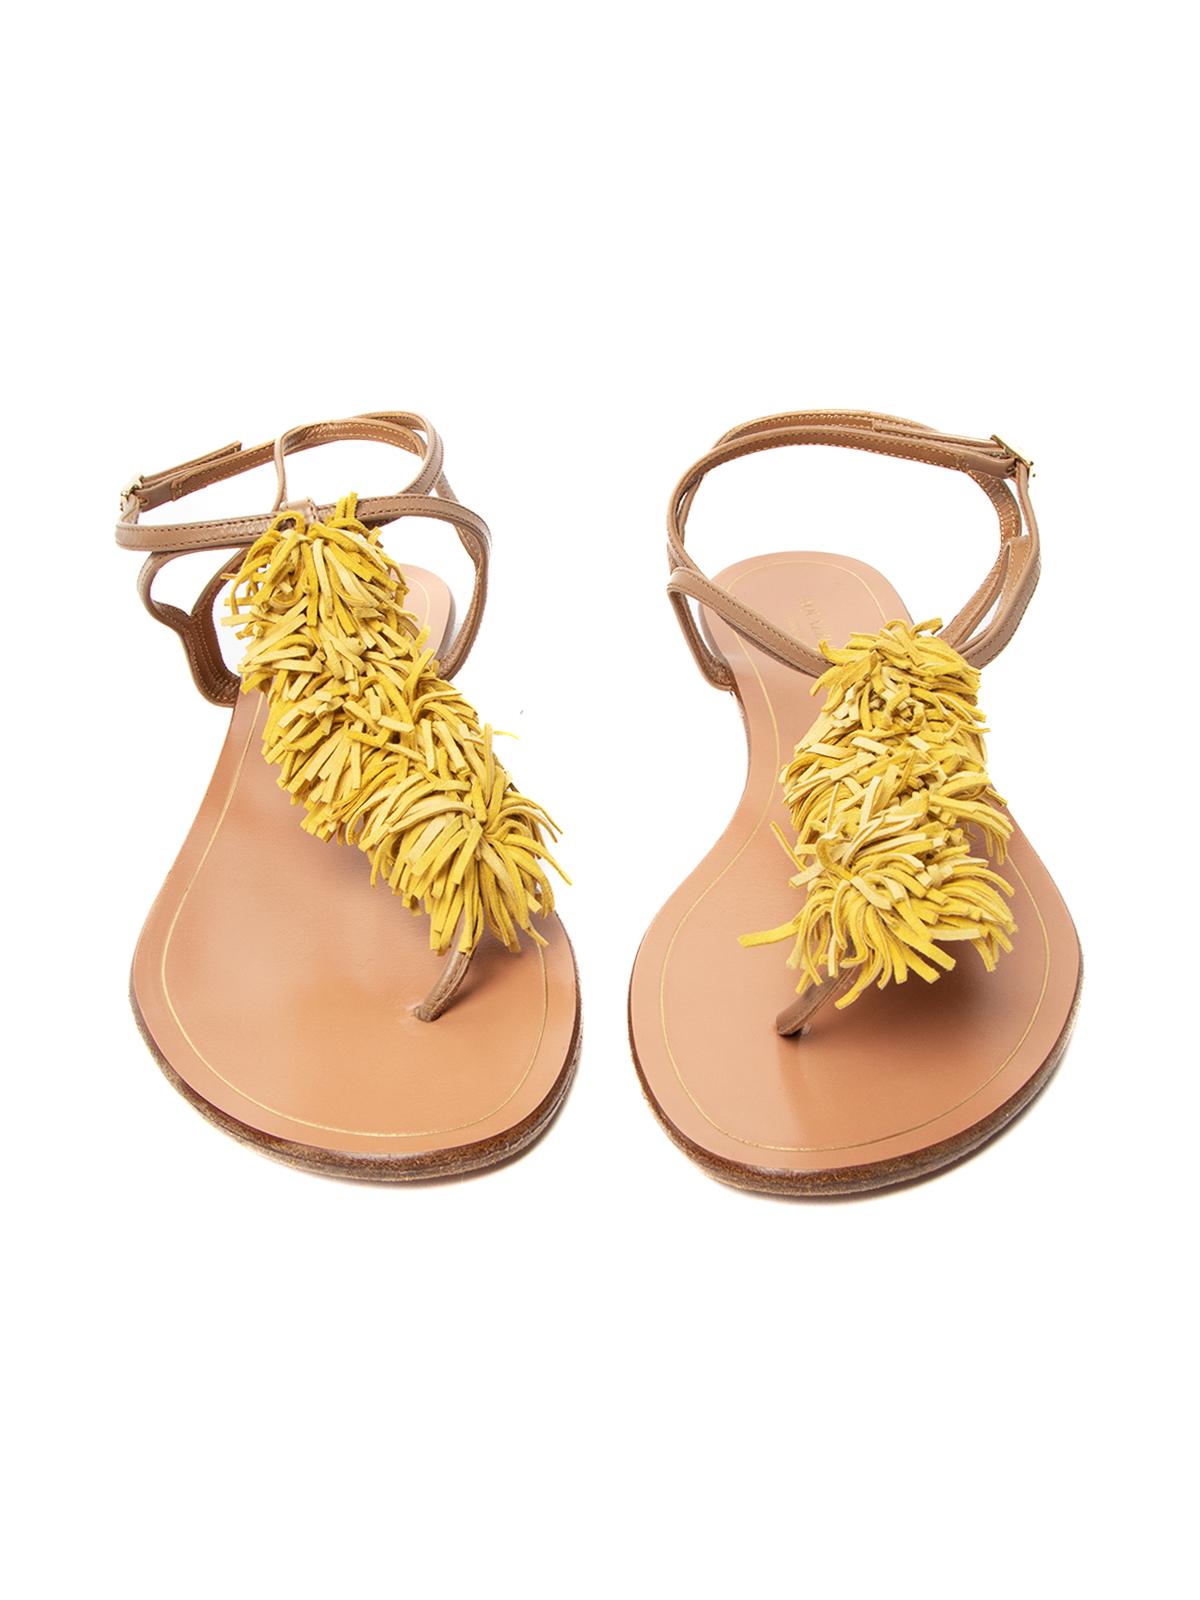 Beige Pre-Loved Aquazzura Women's Strappy Tassel Sandals